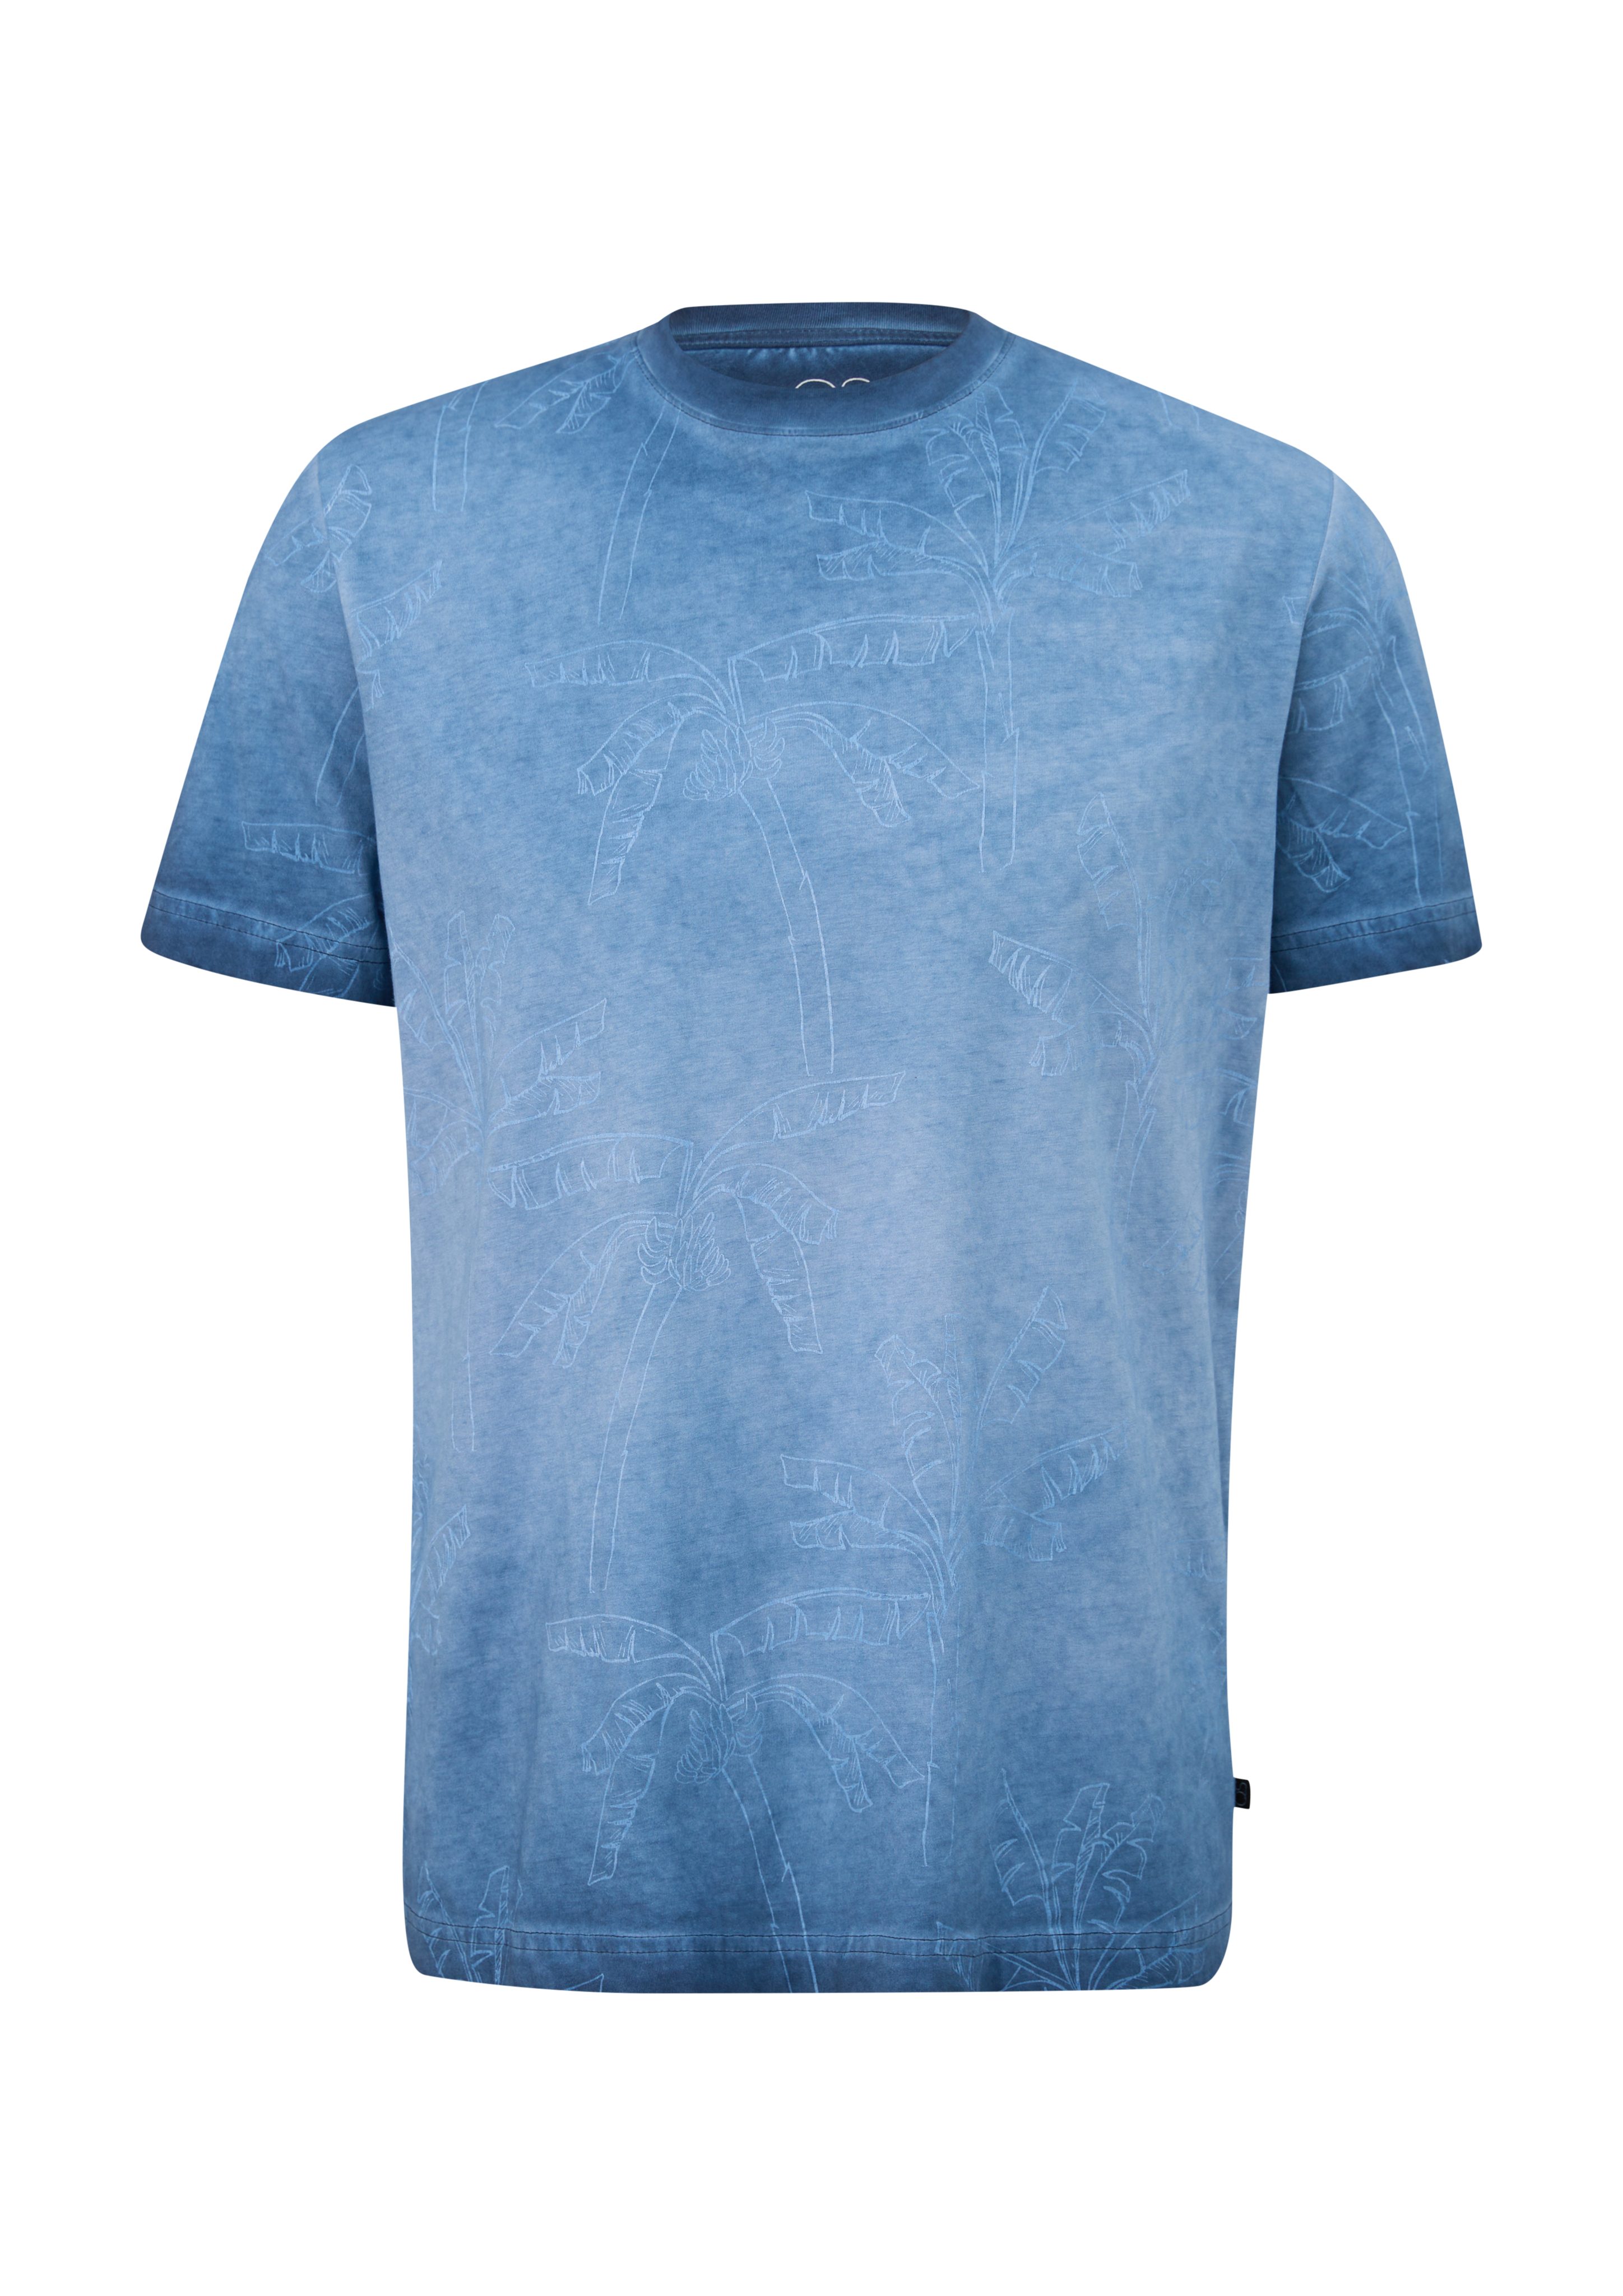 QS Kurzarmshirt T-Shirt aus Baumwolle tiefblau reiner